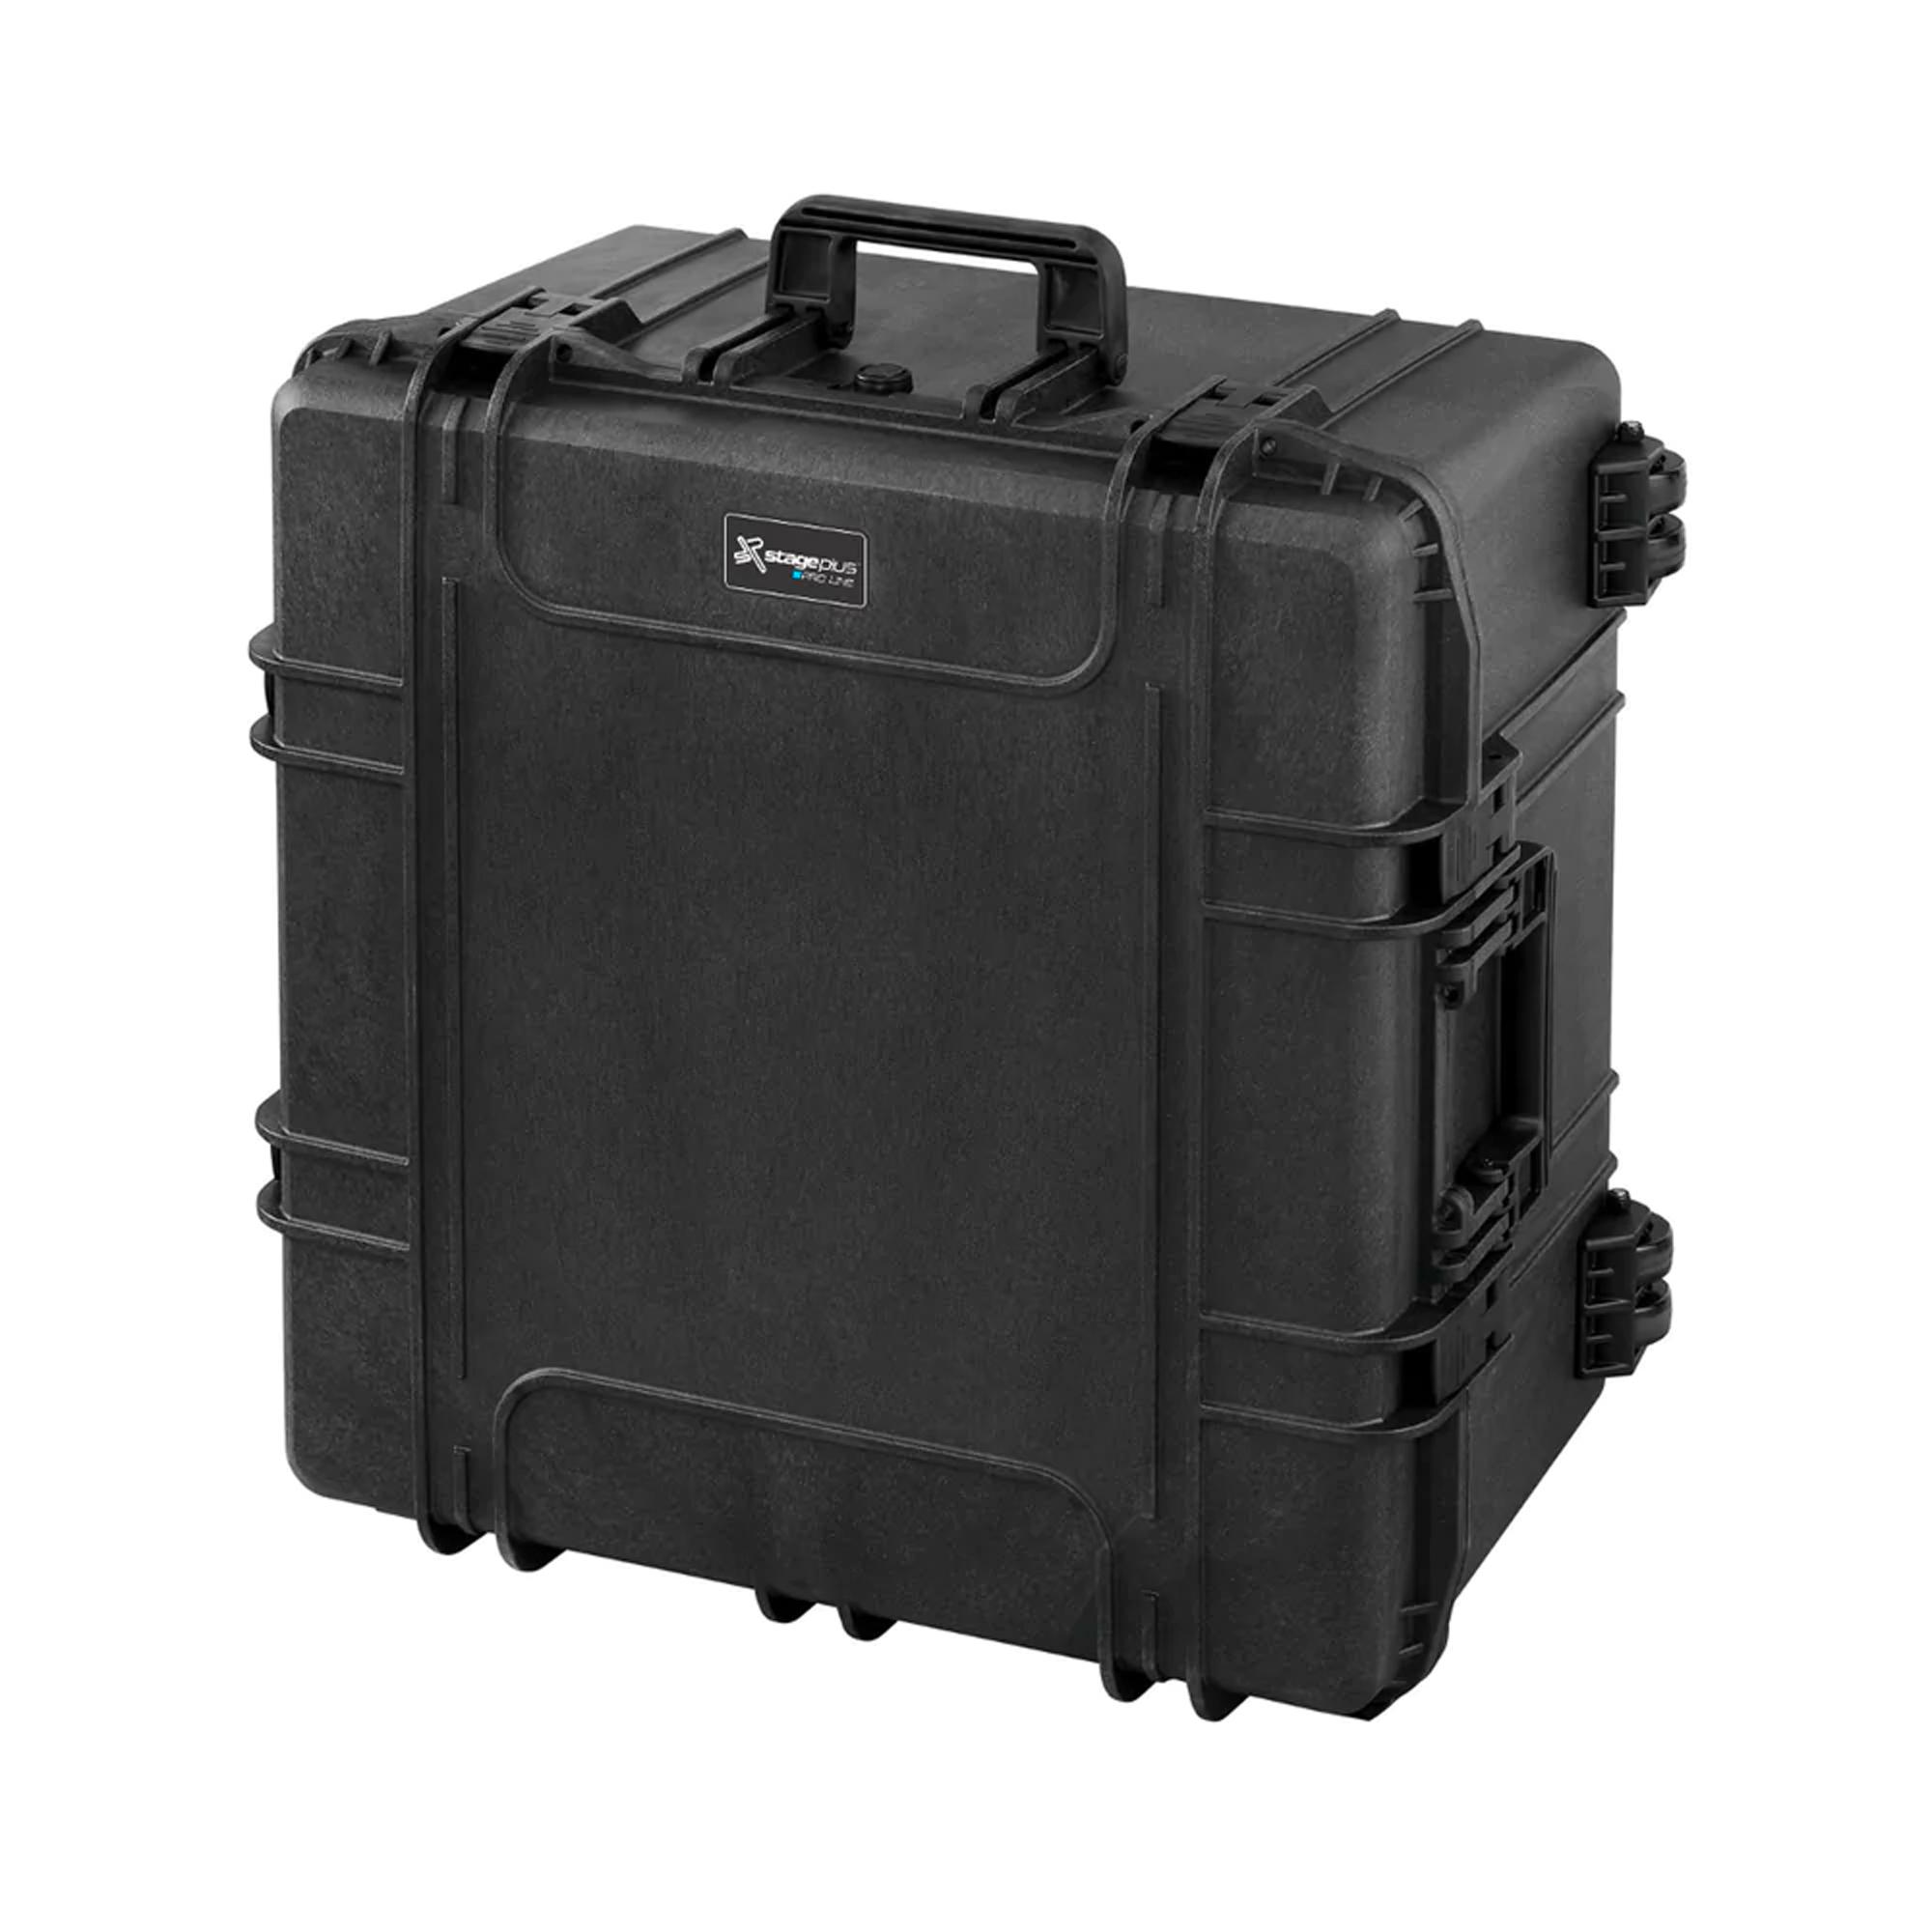 Stage Plus PRO 615S Black Carry Case, Cubed Foams, ID: L615xW615xH360mm